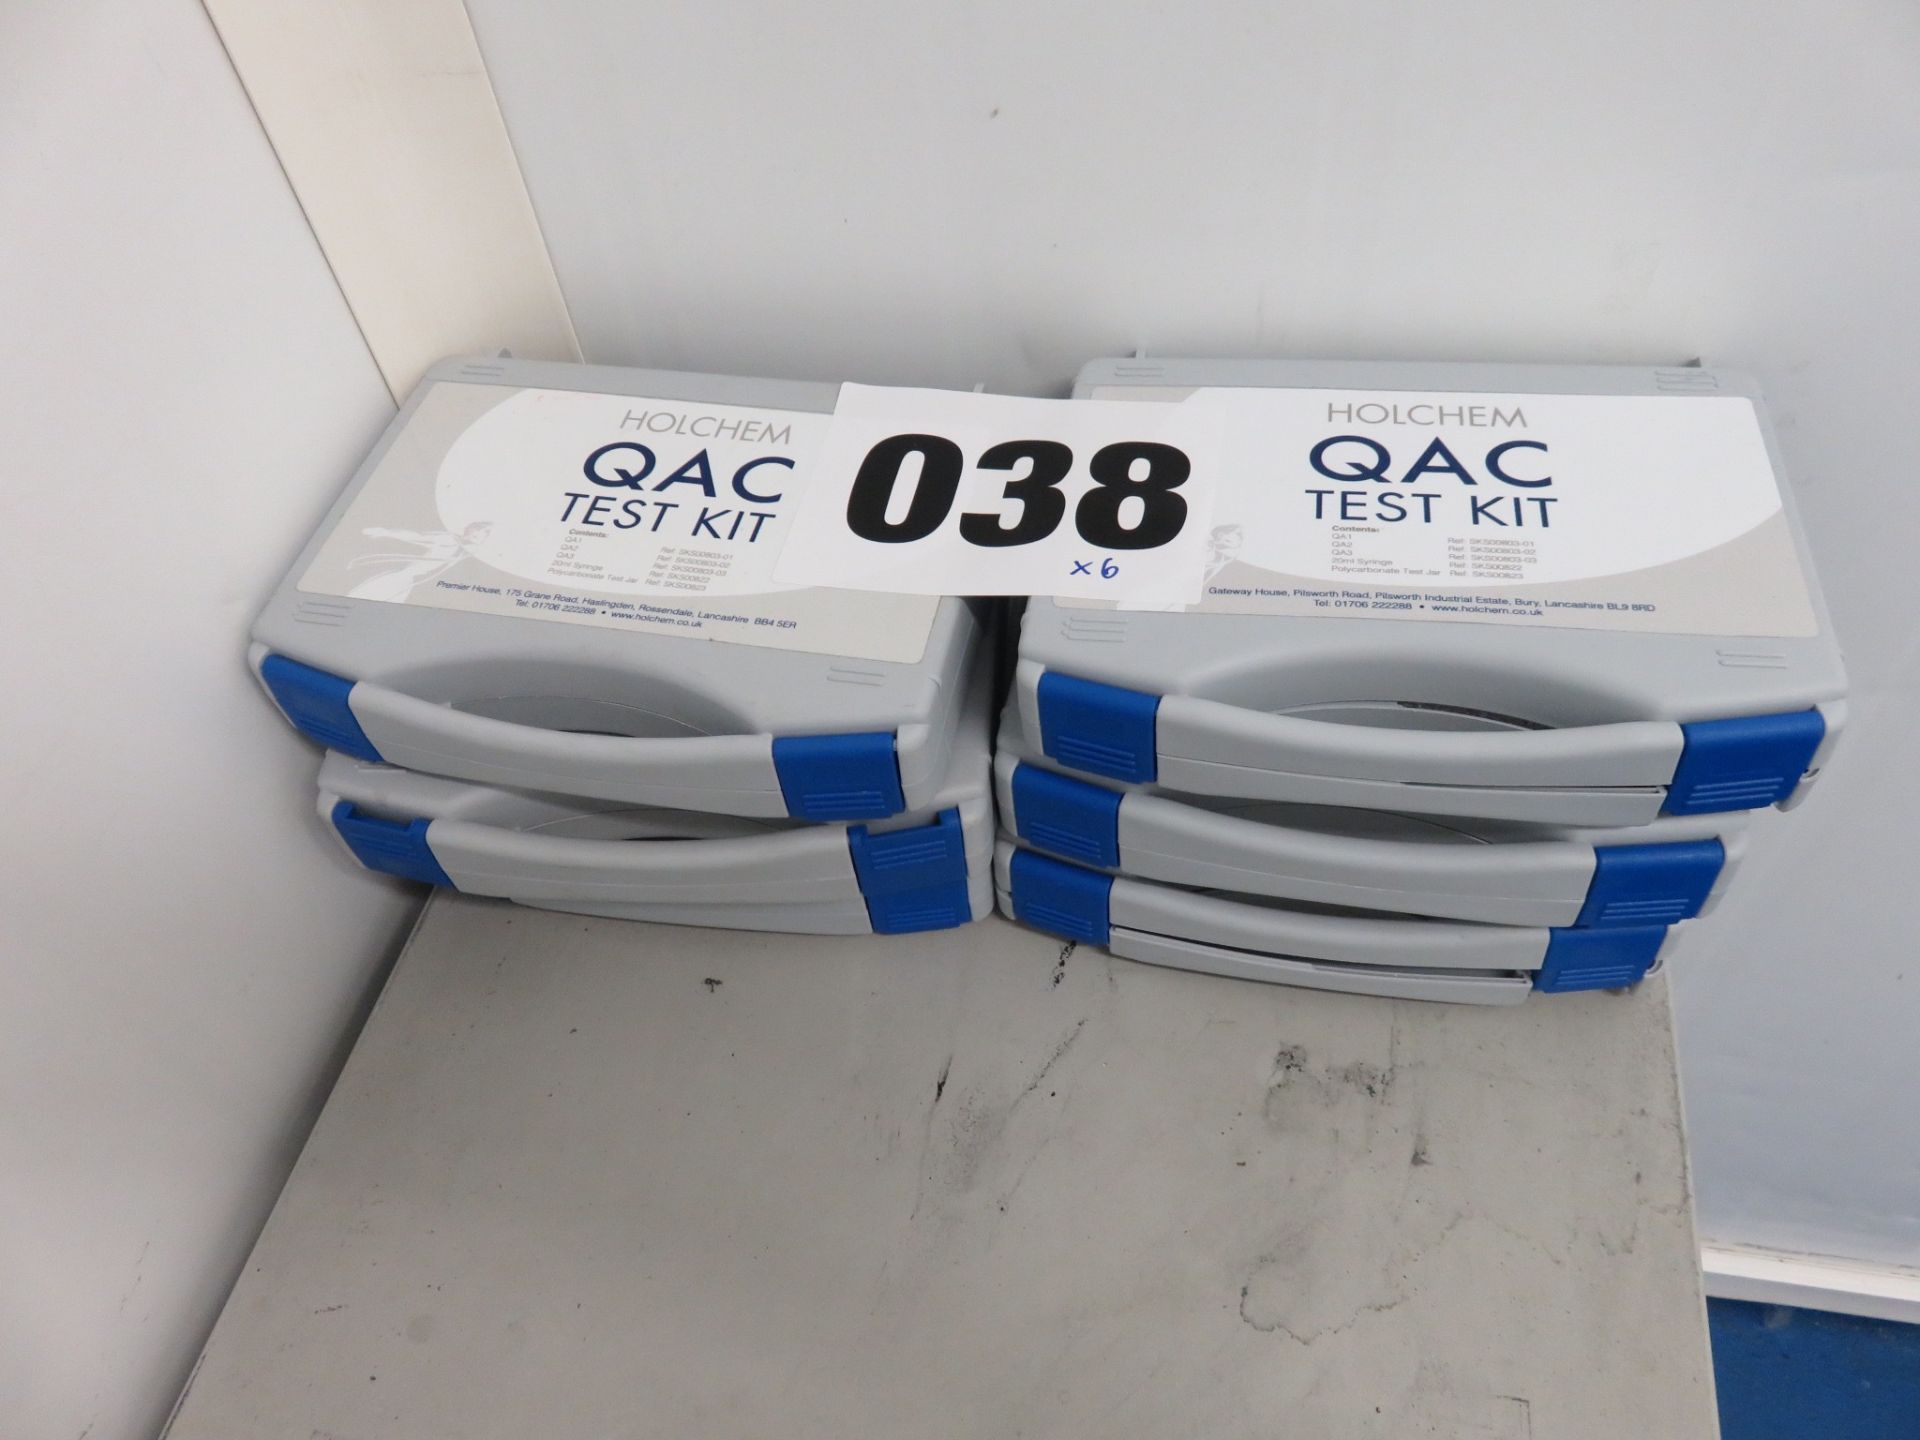 6 x Holchem Qac Test kits. LO £5